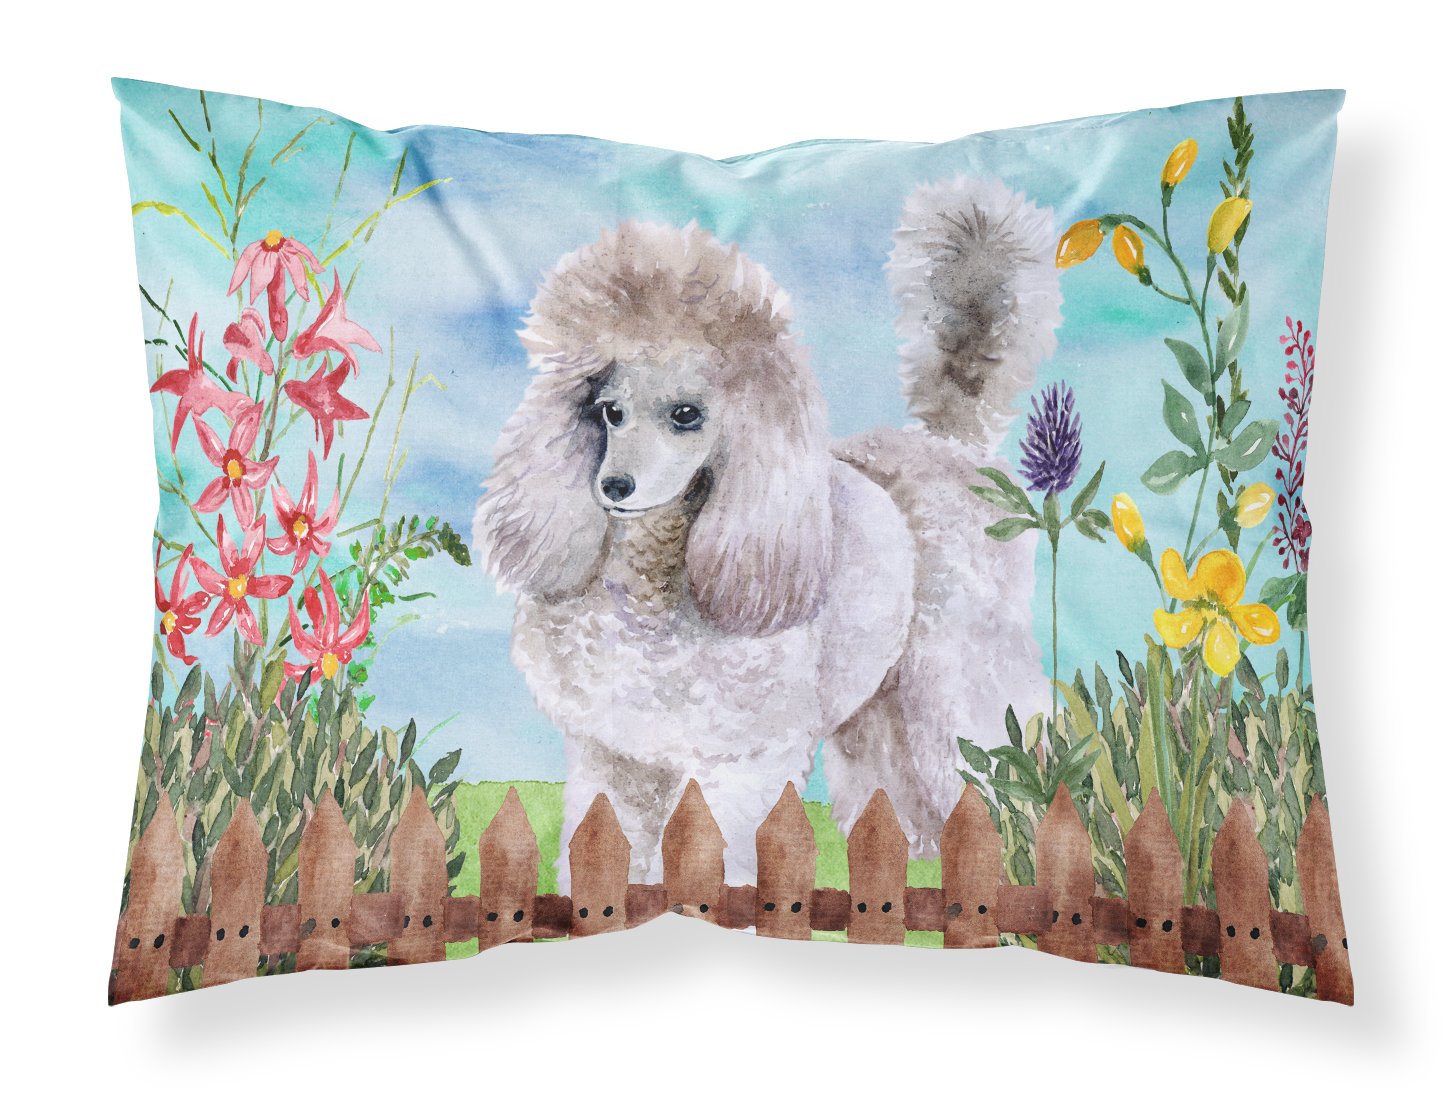 Poodle Spring Fabric Standard Pillowcase CK1227PILLOWCASE by Caroline's Treasures